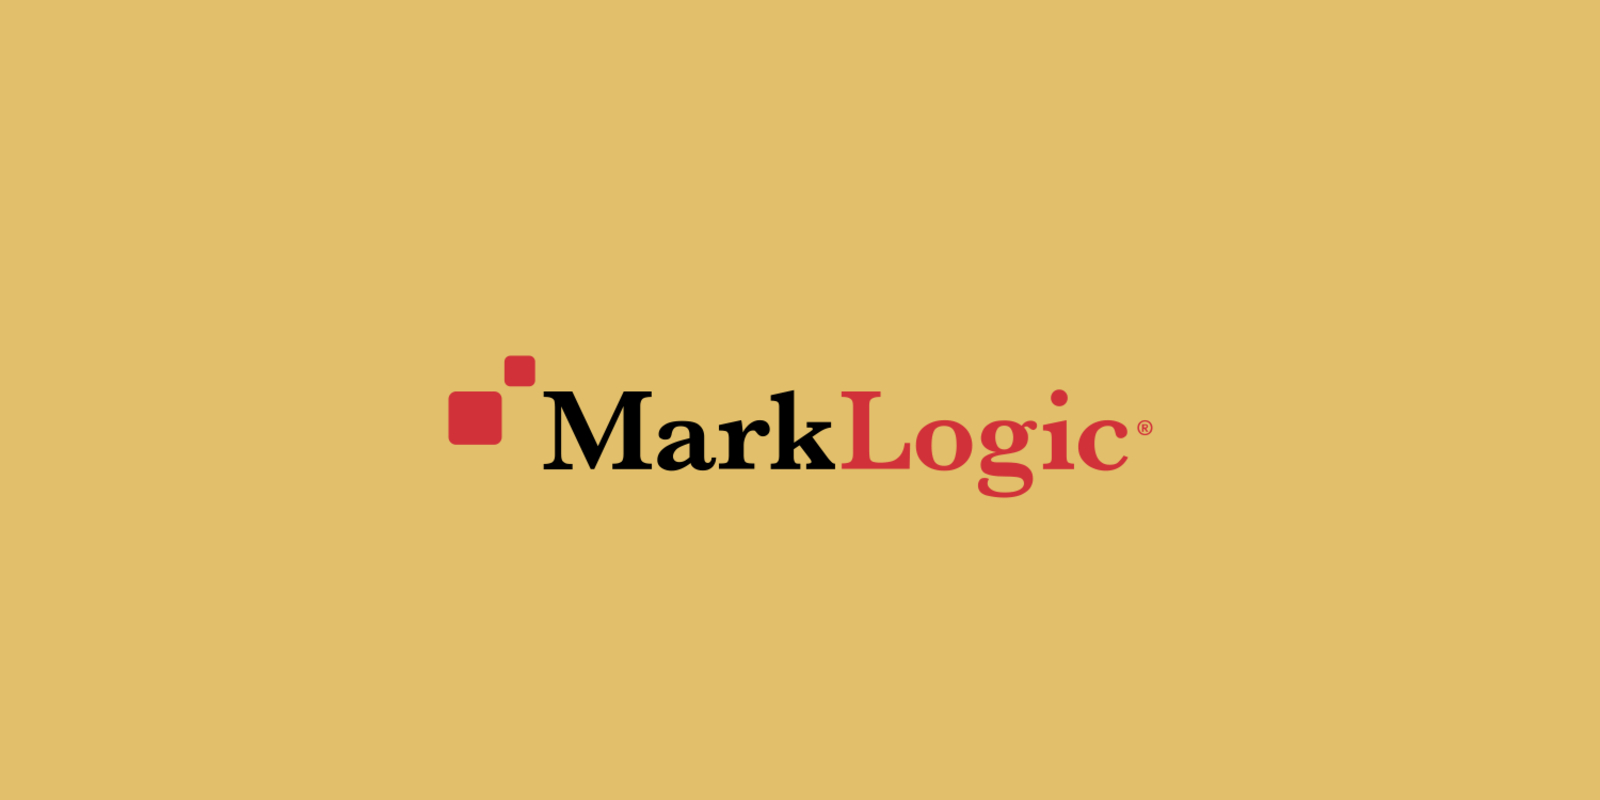 Mark Logic